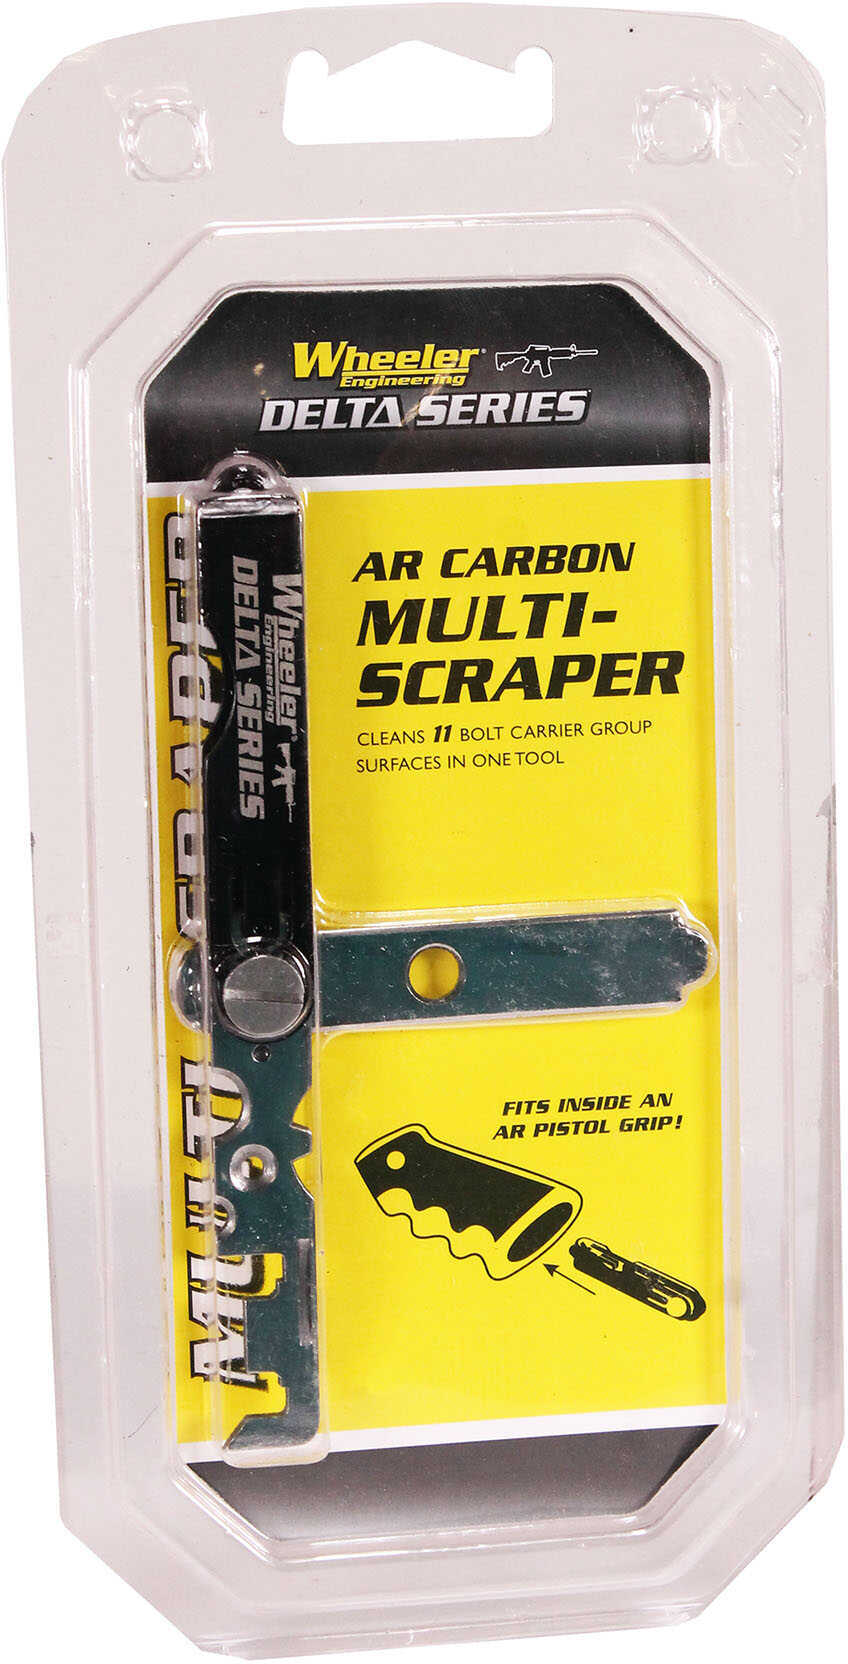 Delta Series AR Carbon Multi-Scraper